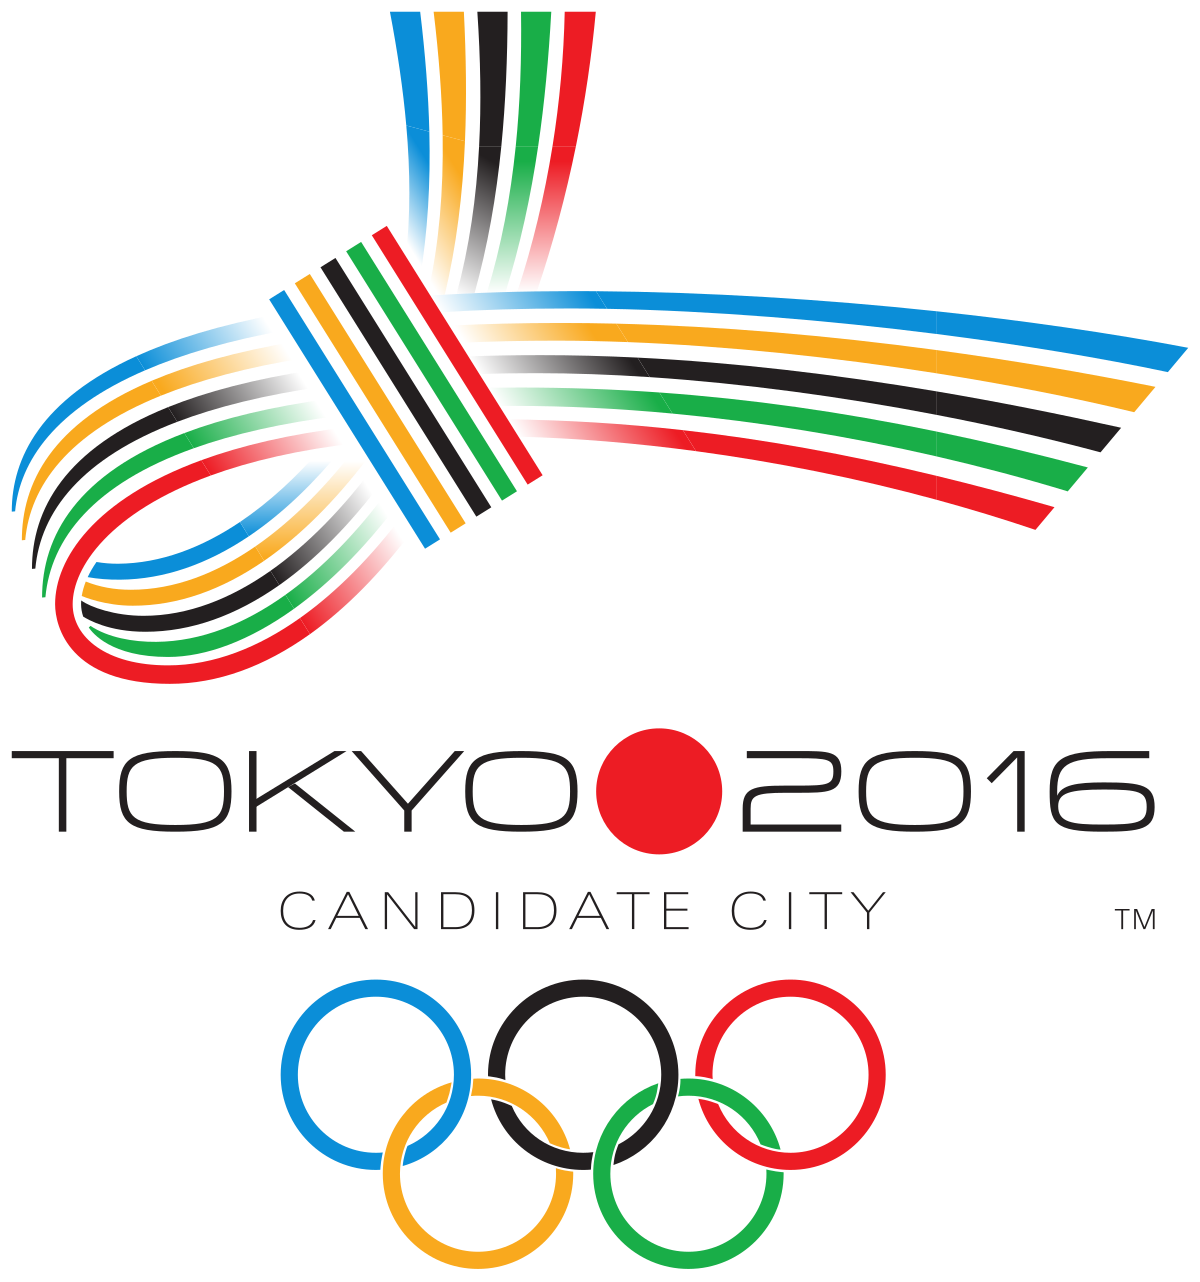 Tokyo Bid For The 2016 Summer Olympics Wikipedia